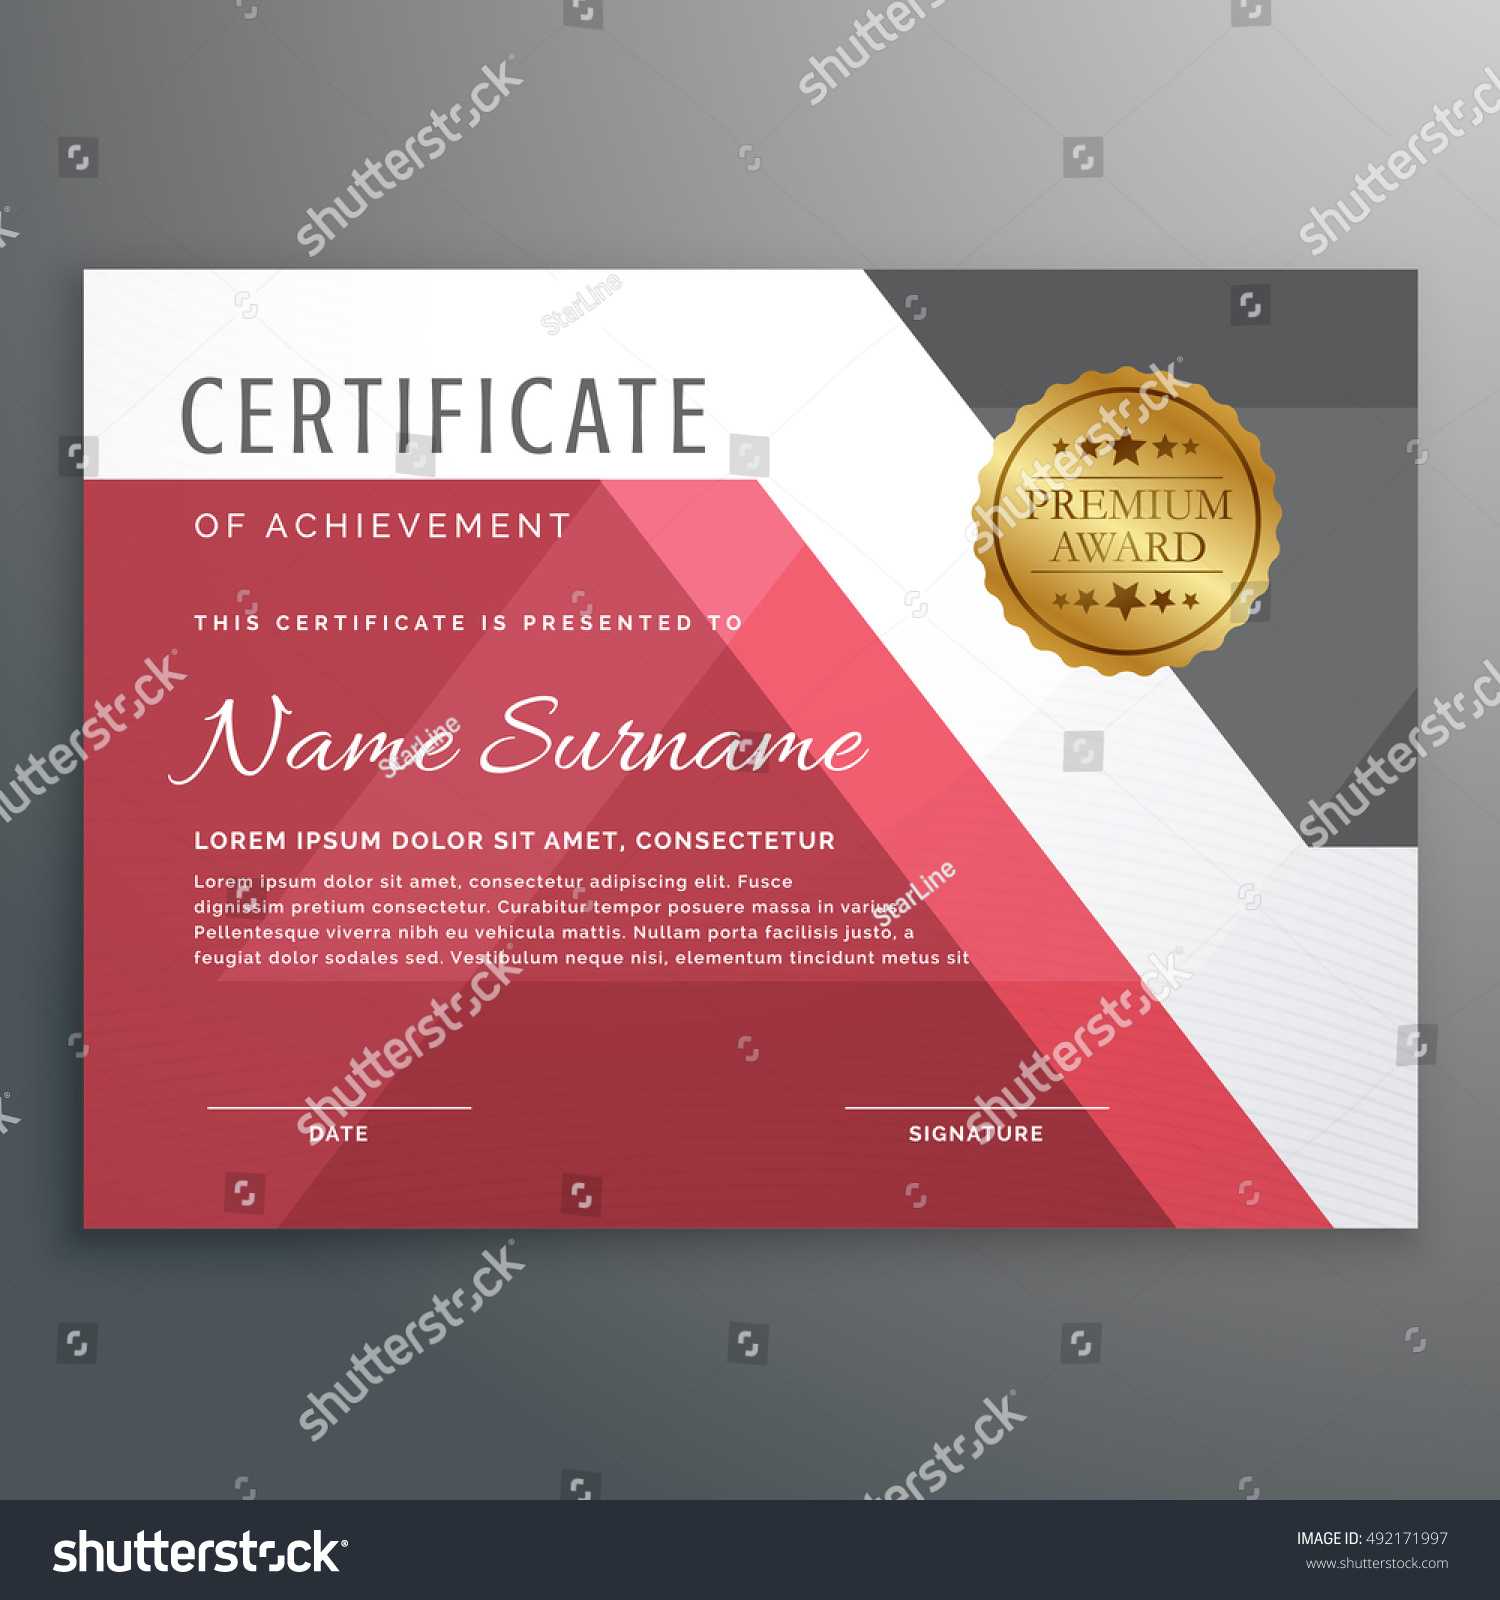 Elegant Certificate Template Geometric Shapes Stock Vector Within Elegant Certificate Templates Free